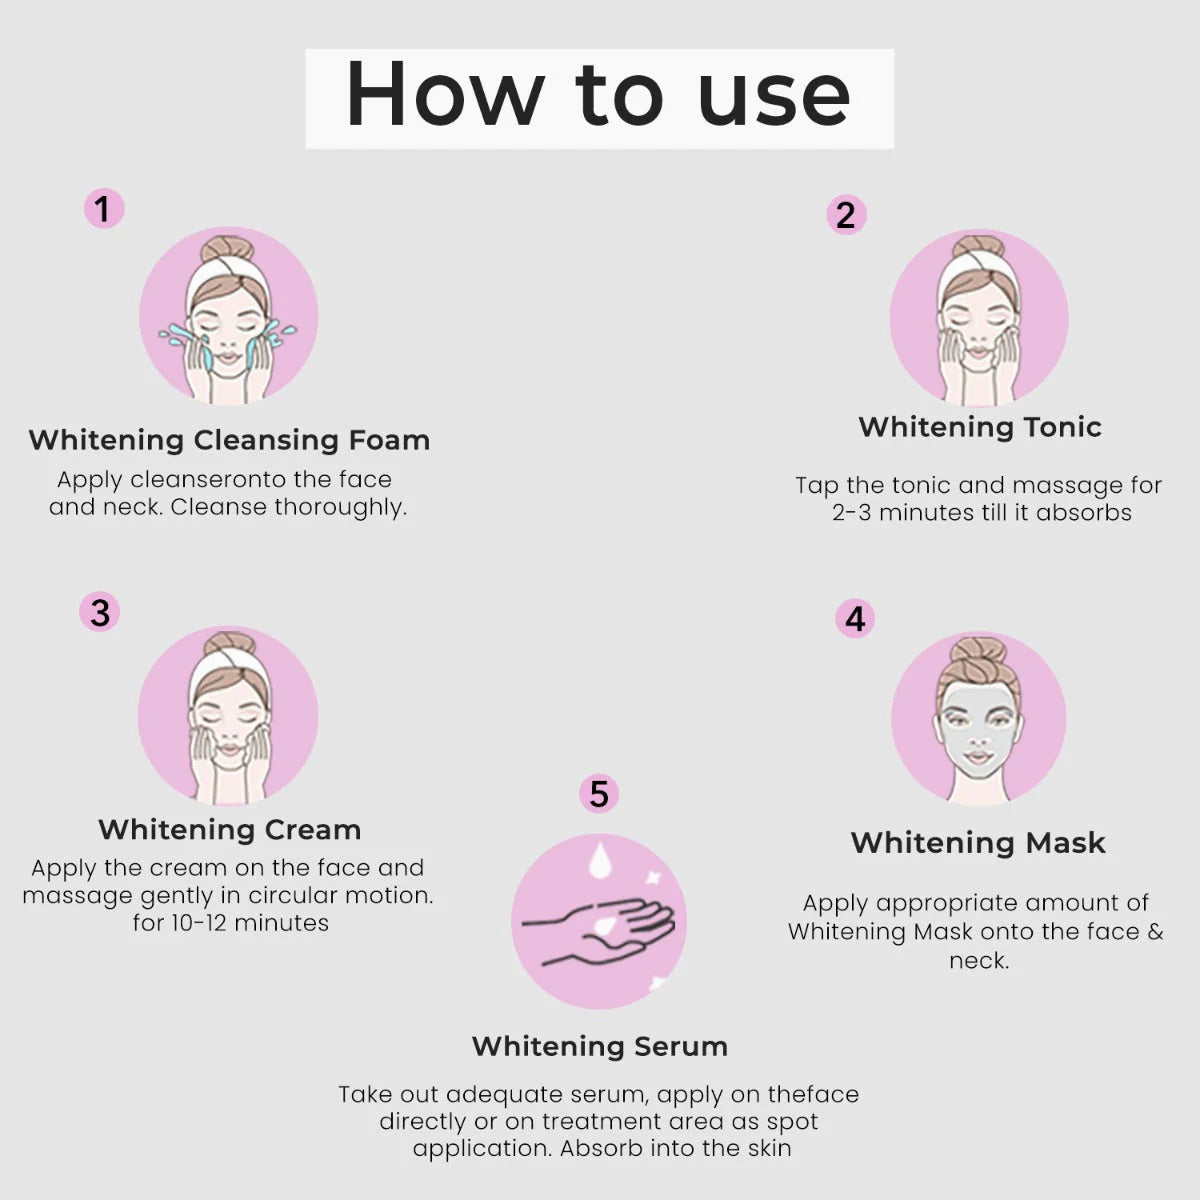 Whitening Facial Kit for Brightening & Lightening Skin